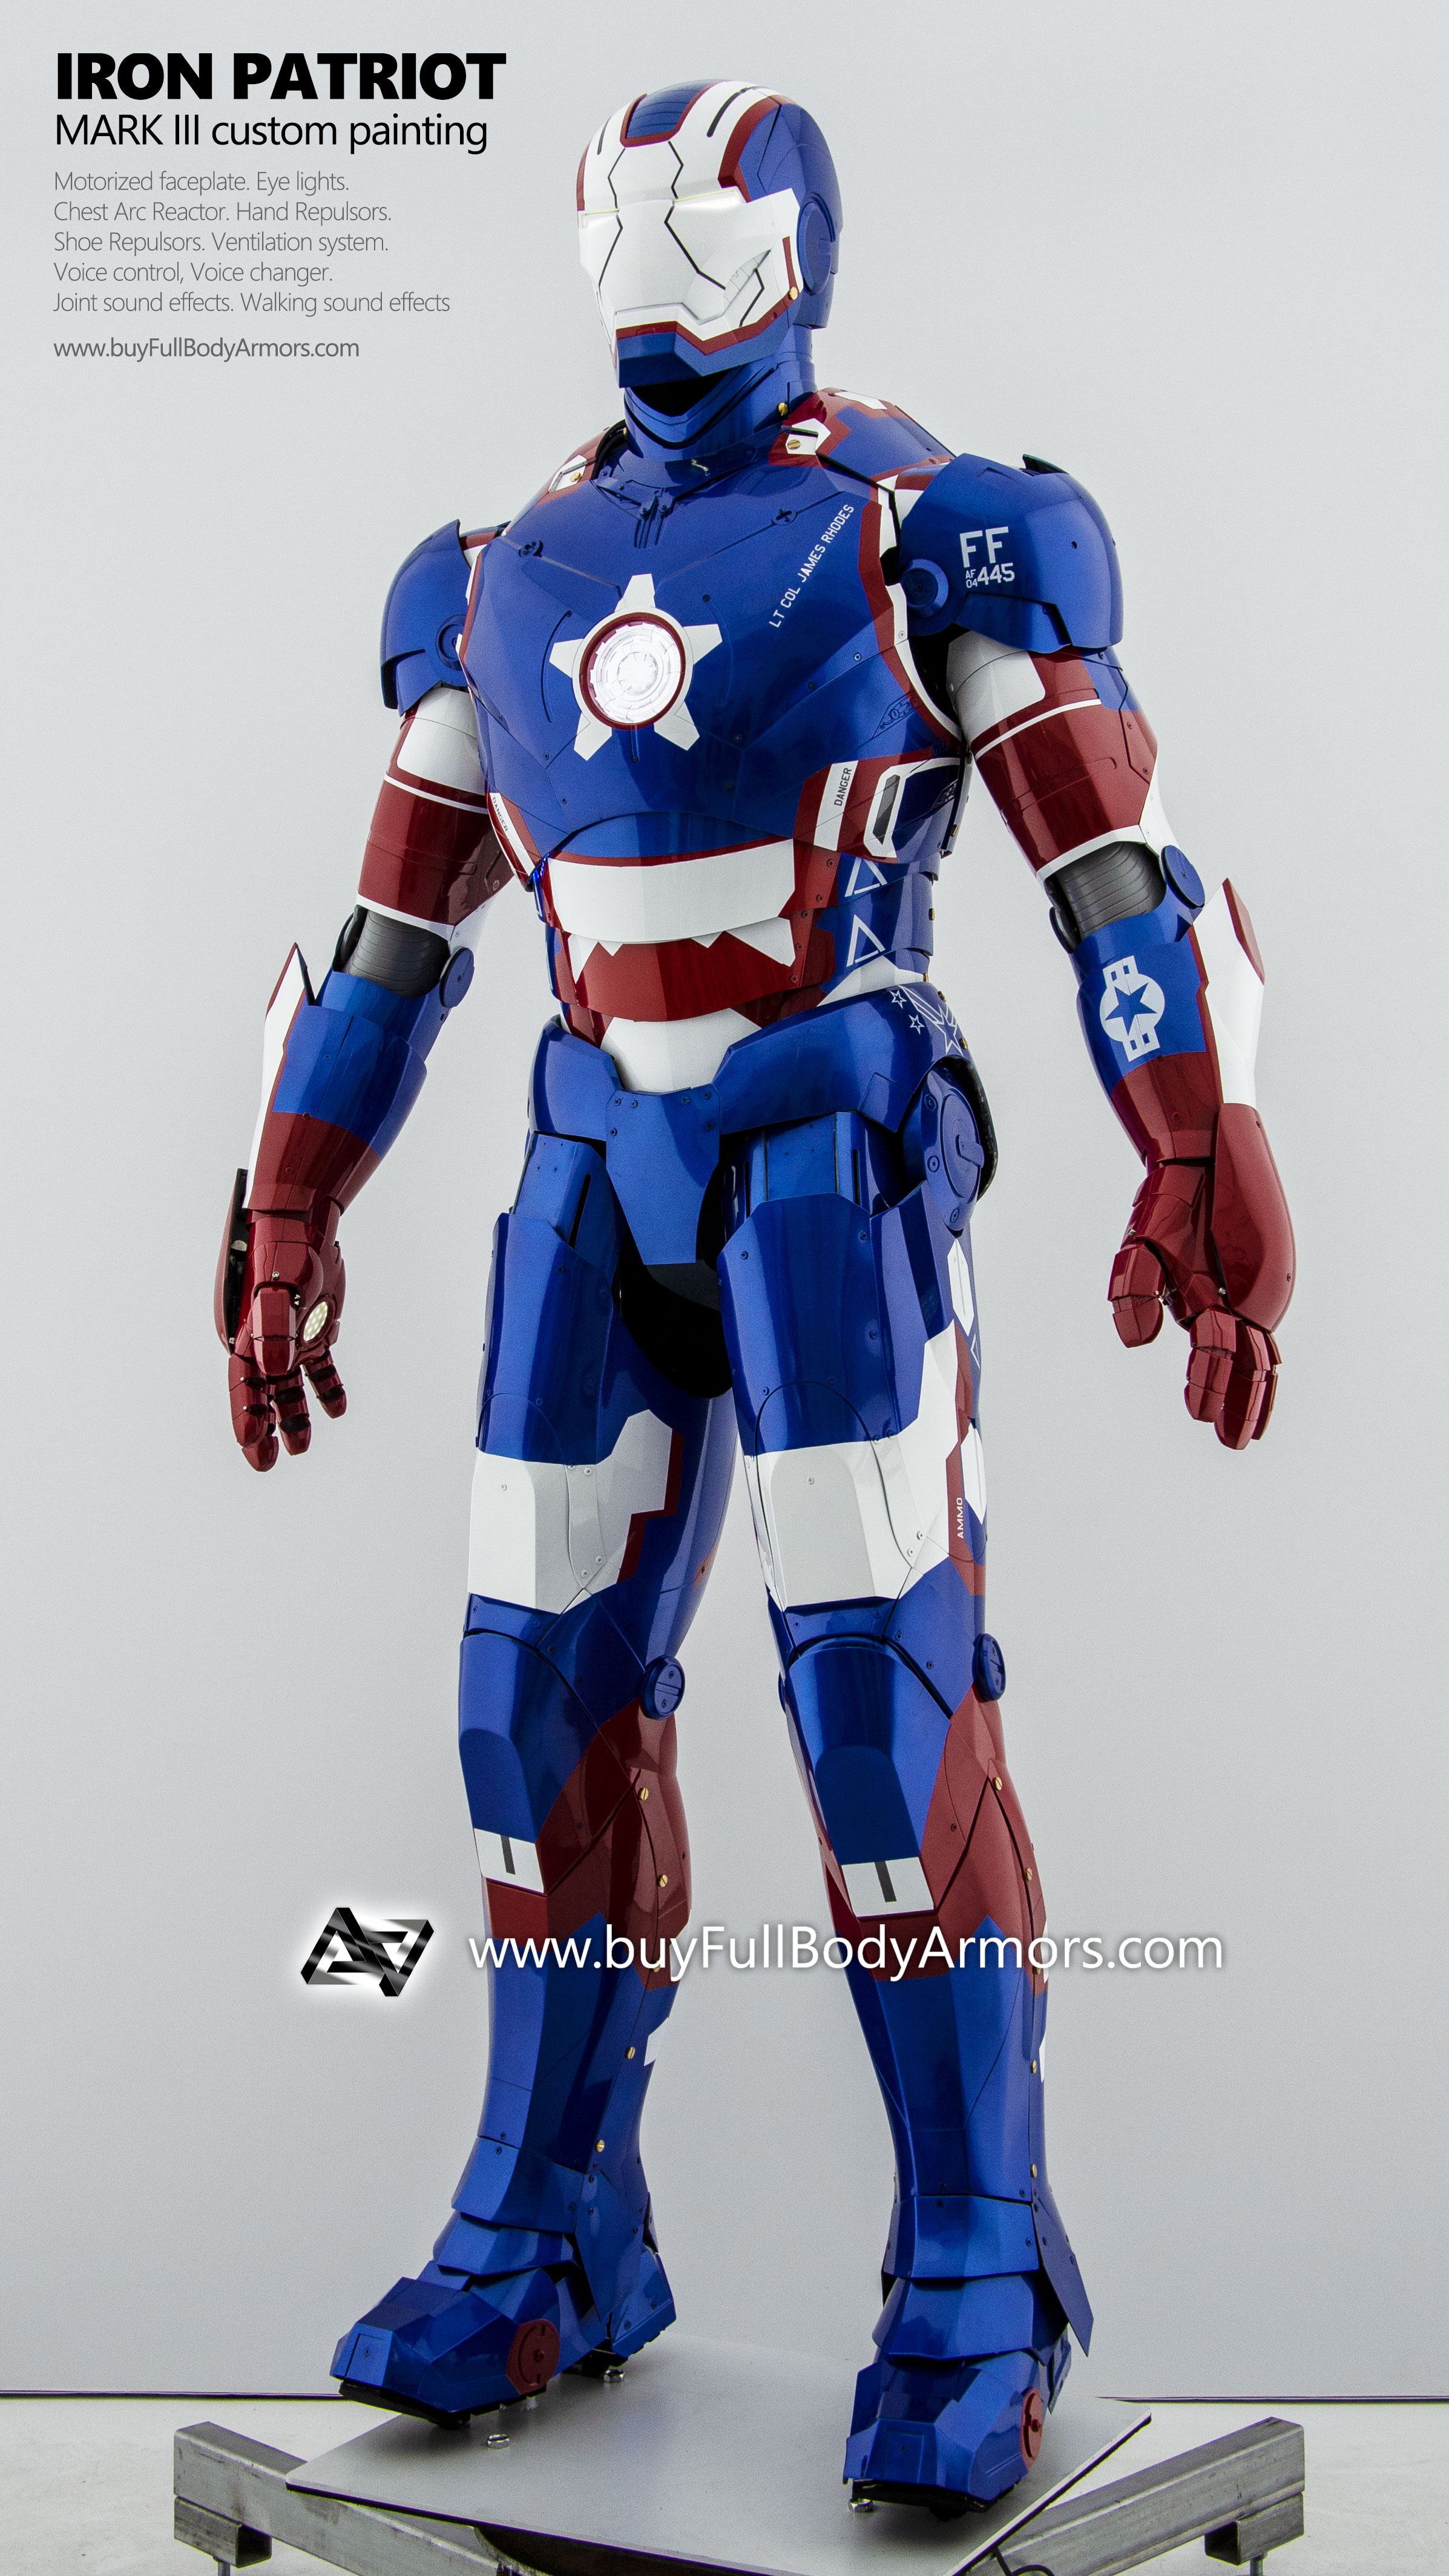 wearable Iron Patriot Iron Man Suit Mark 3 III Armor Costume top banner